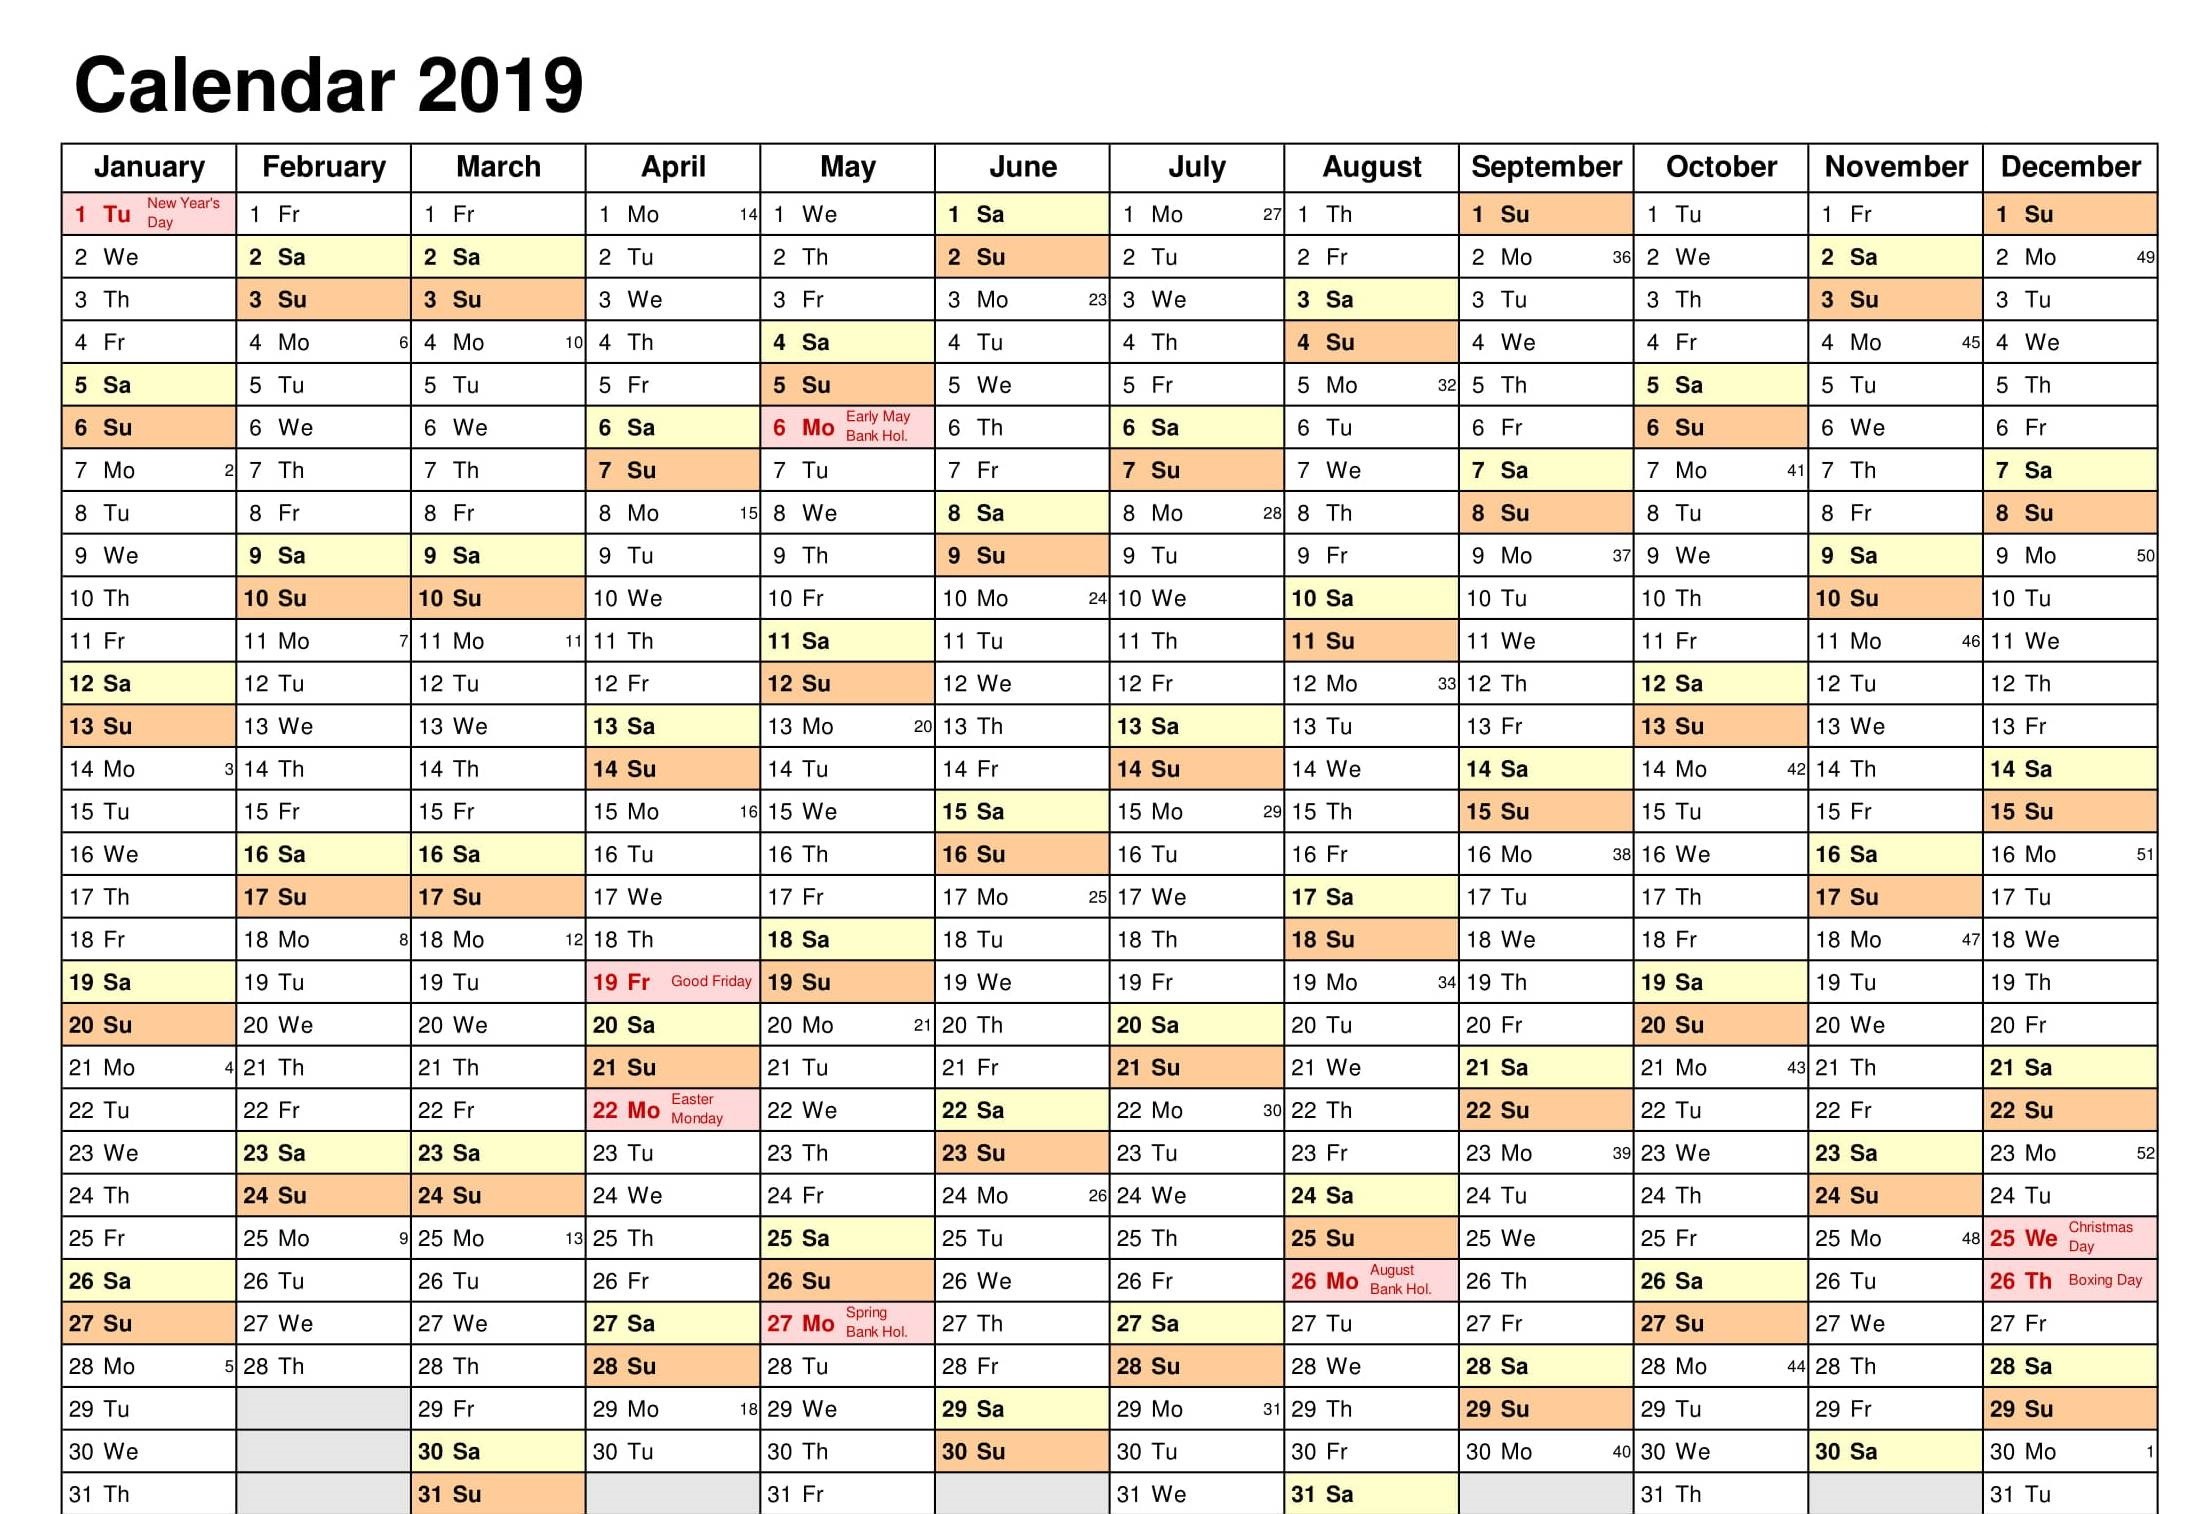 2018 calendar work schedule printable